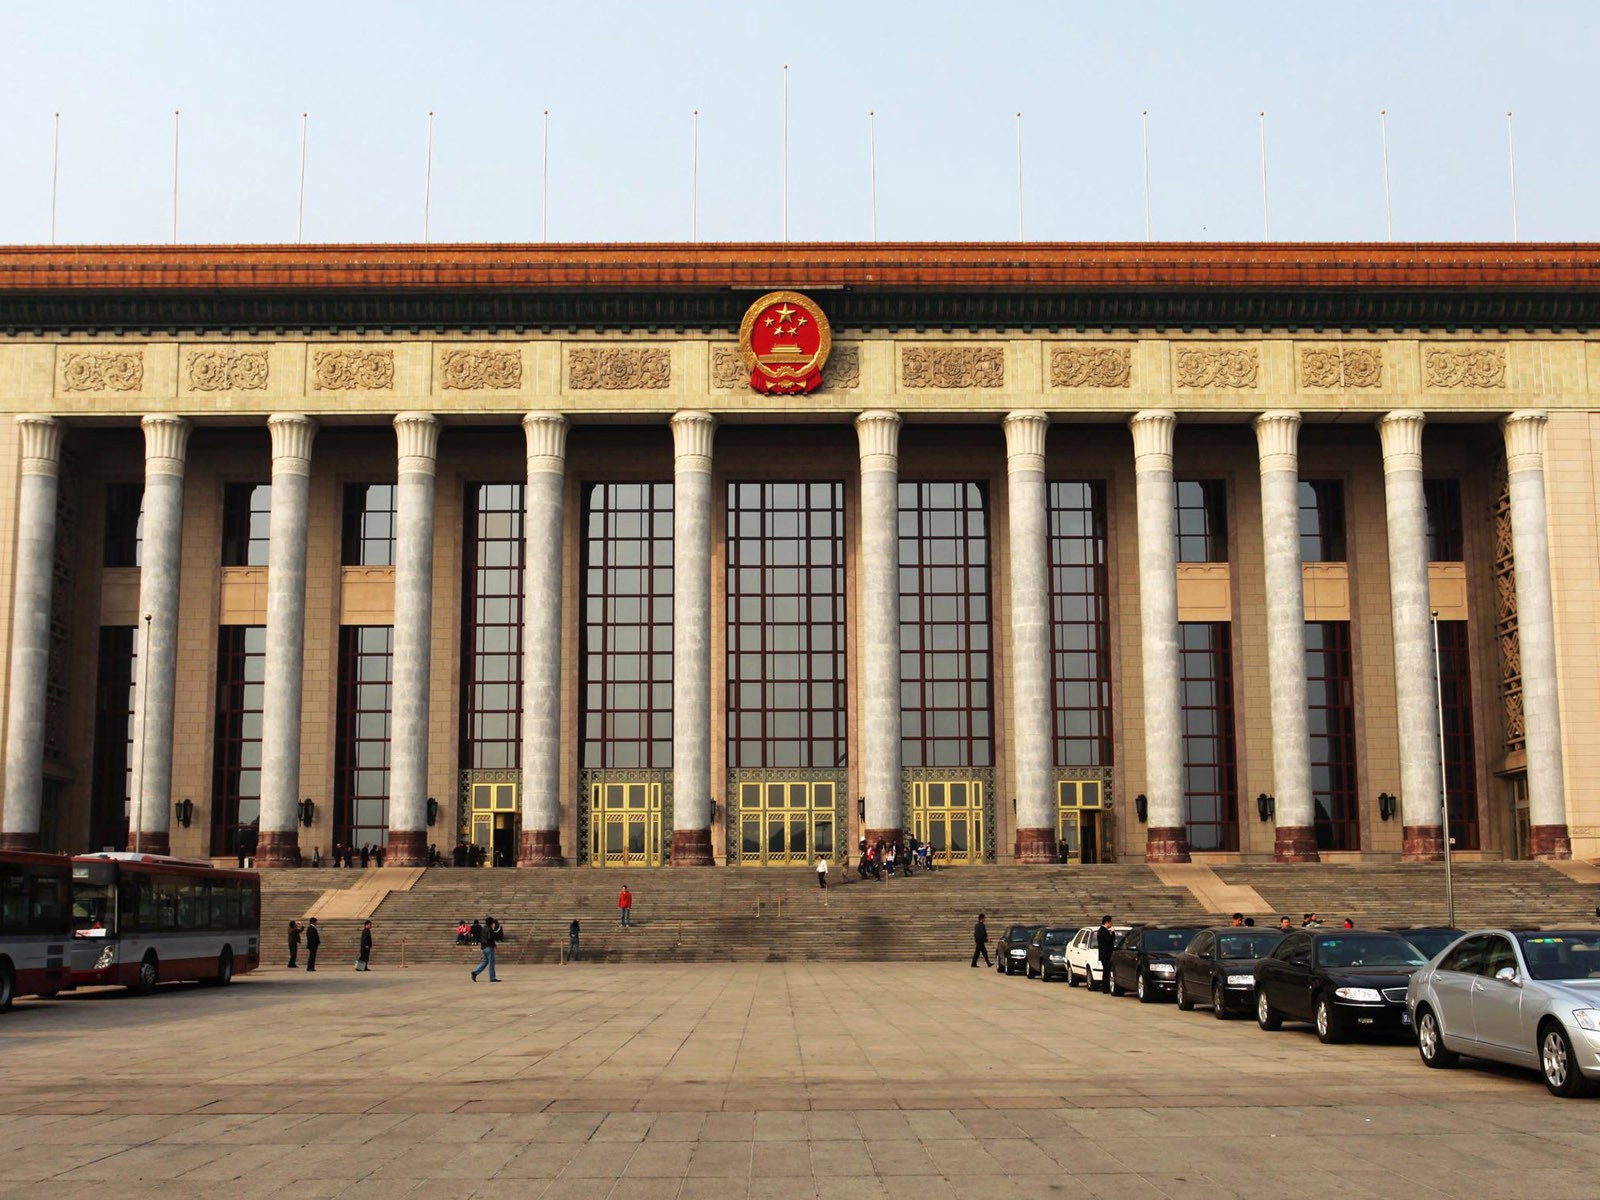 Beijing Tour - Great Hall (ggc works) #1 - 1600x1200